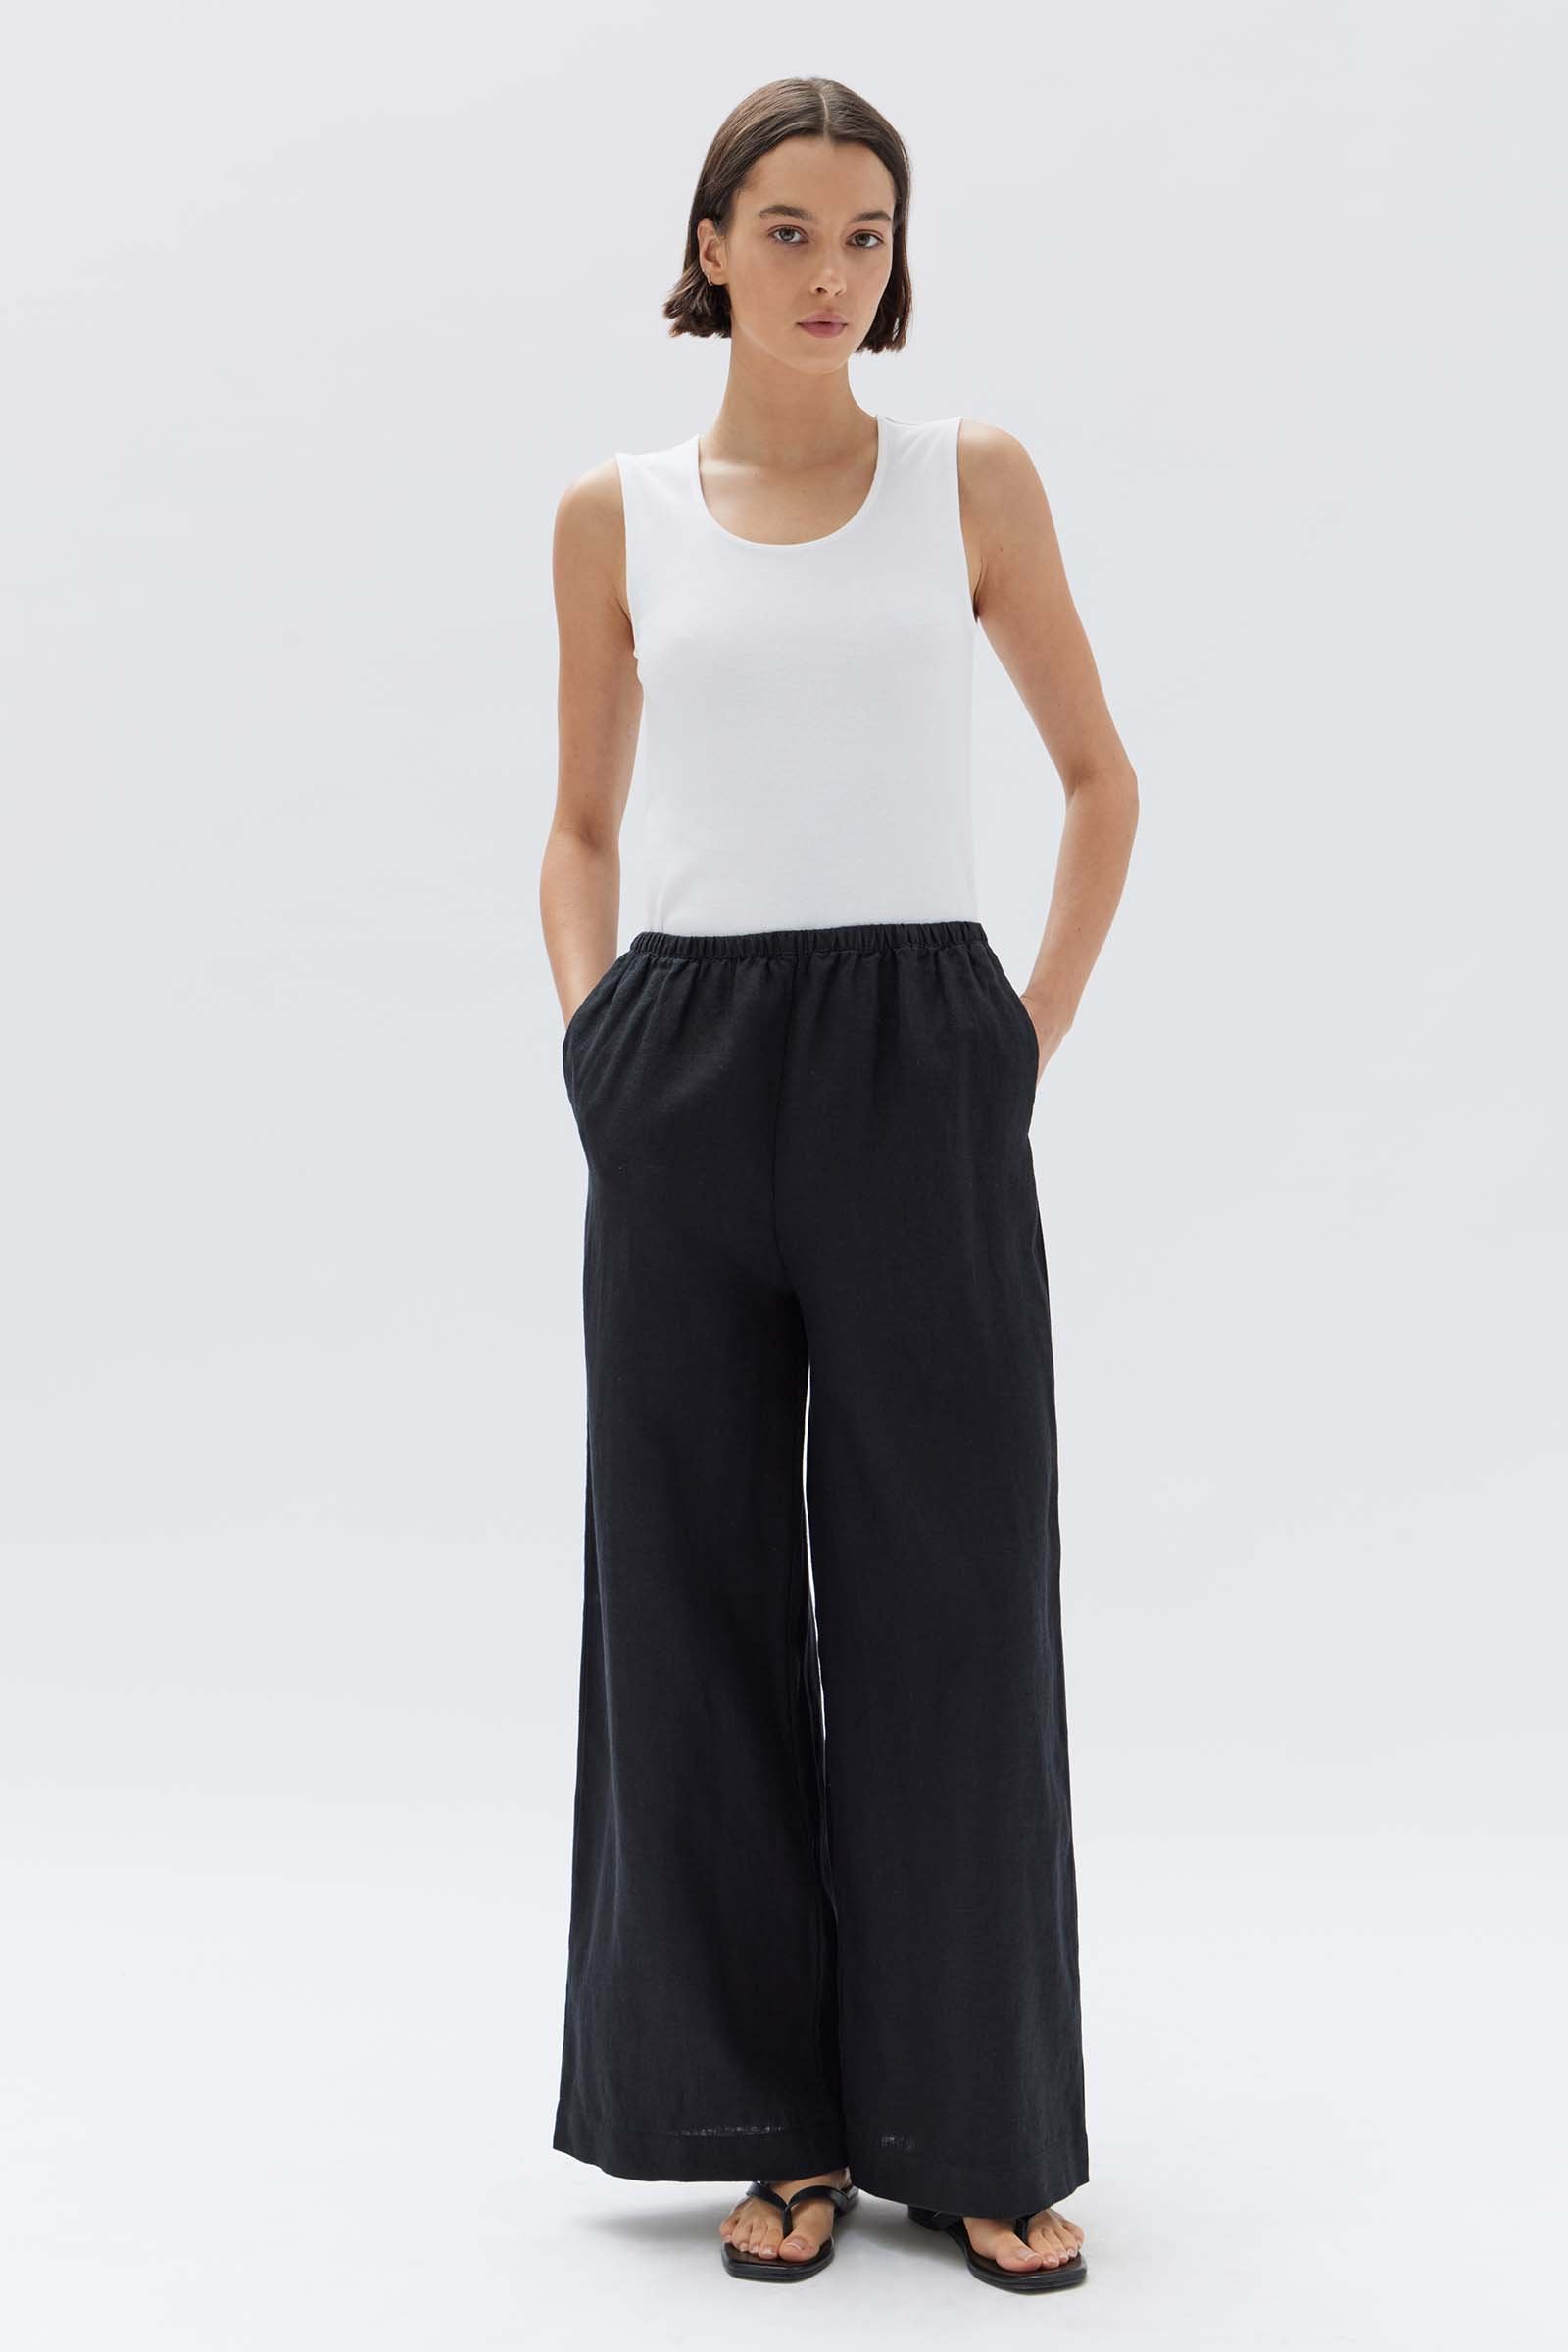 Best Linen Pants for Women - Unbelievable $79 - Denim Is the New Black